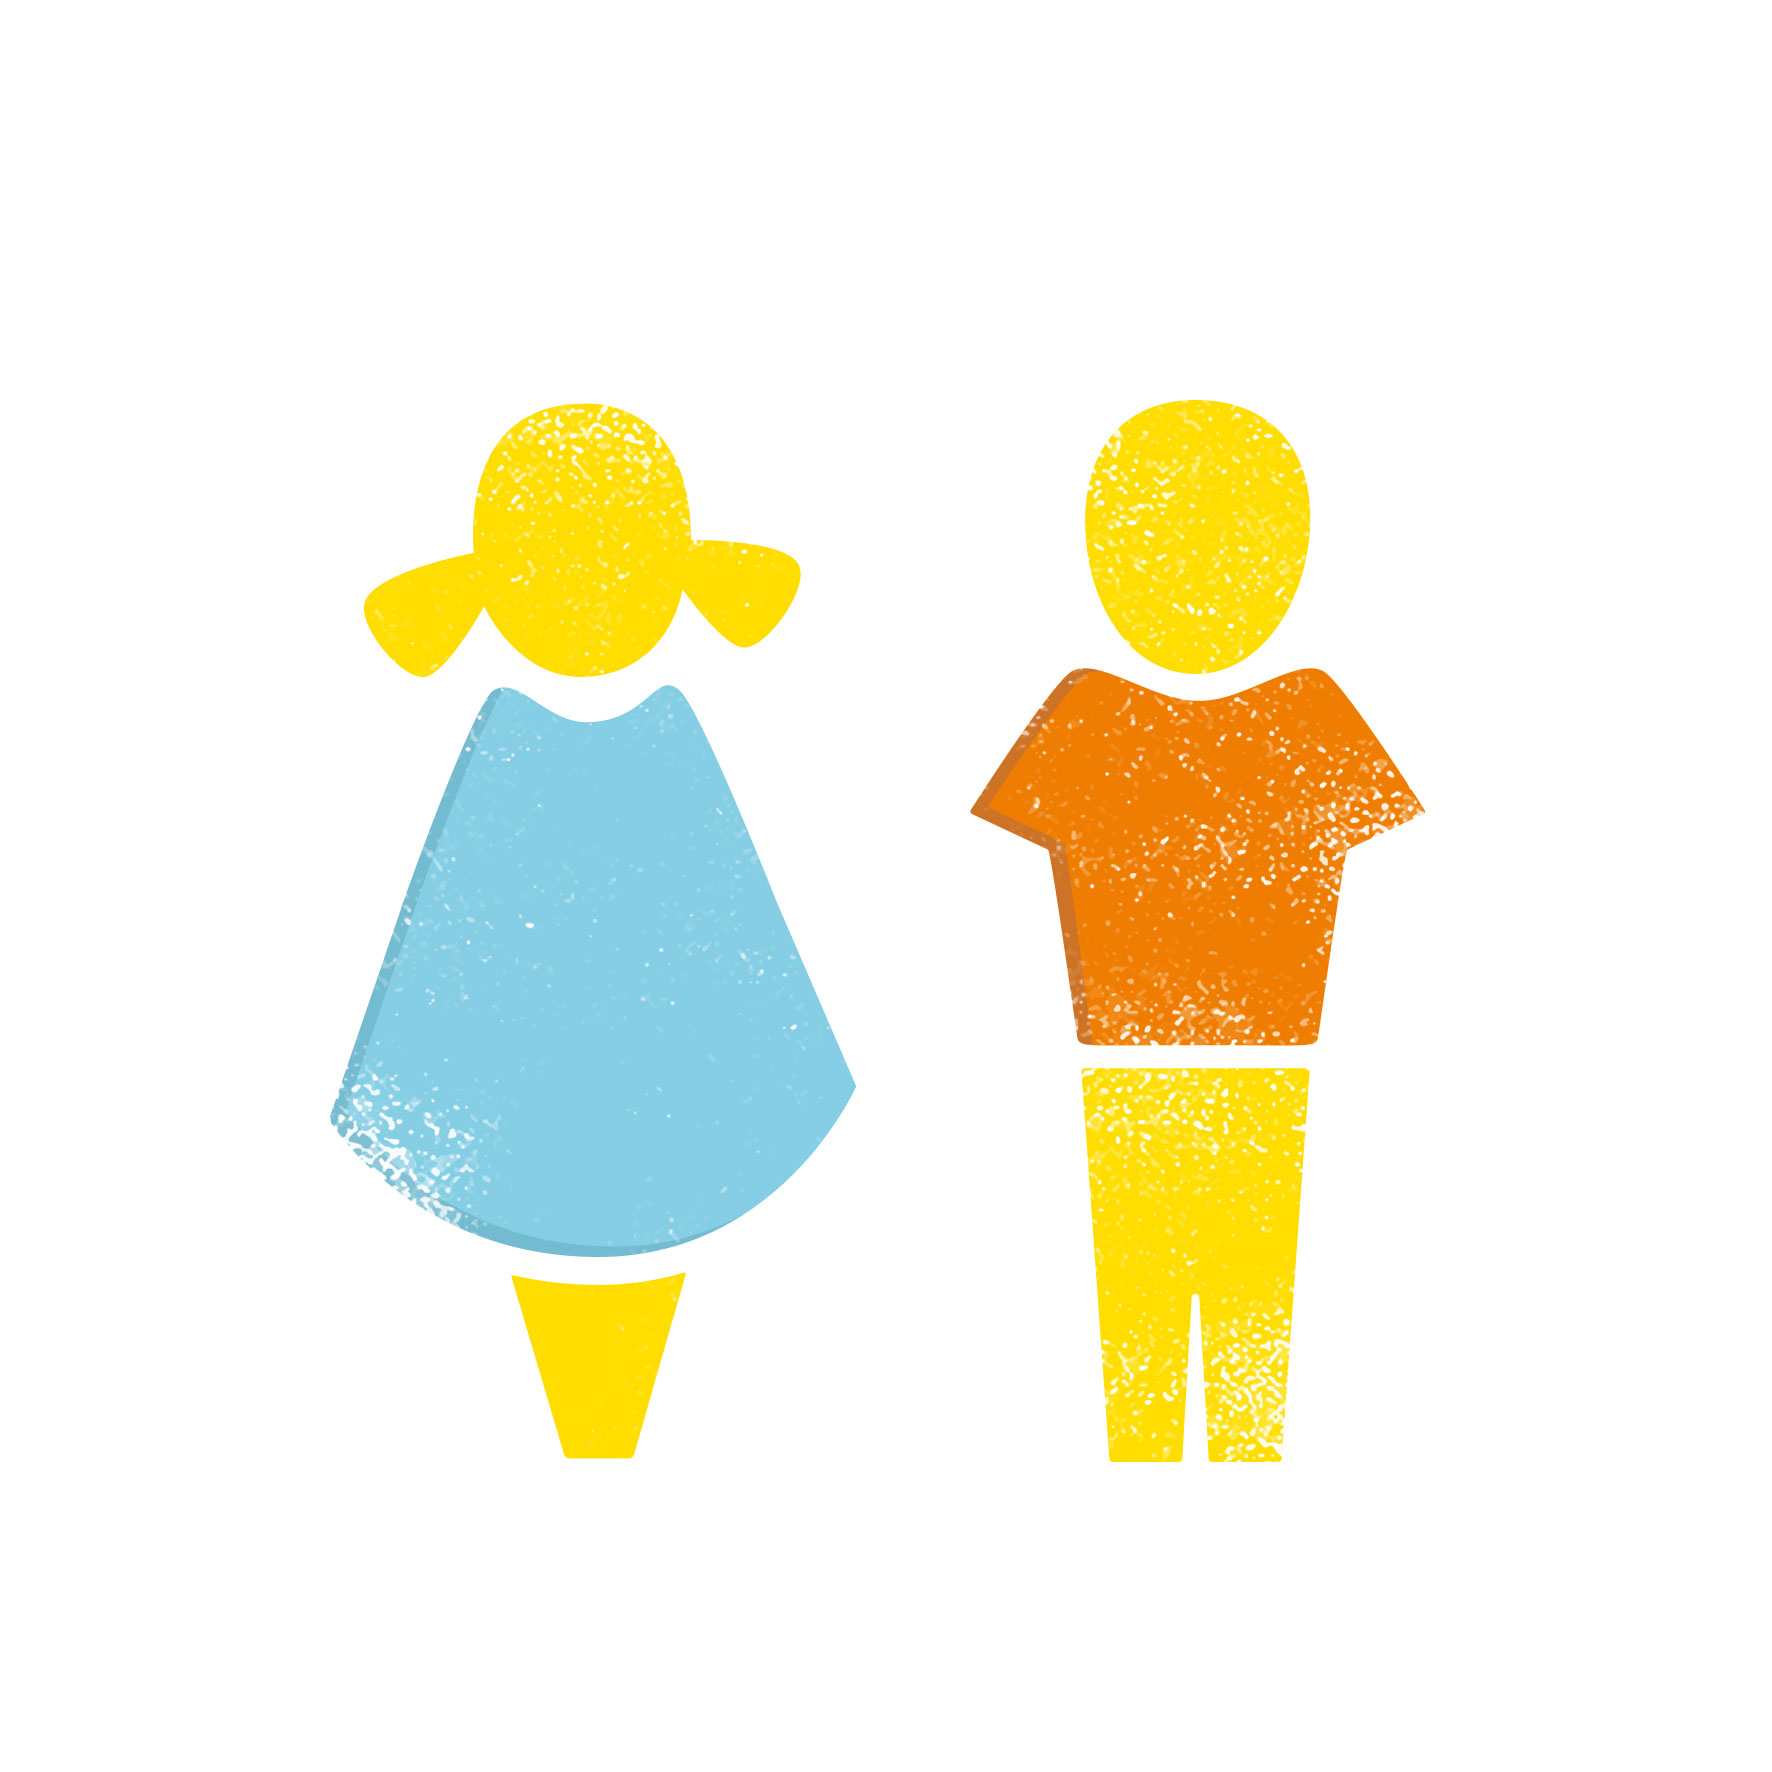 Boy-and-Girl-icon.jpg